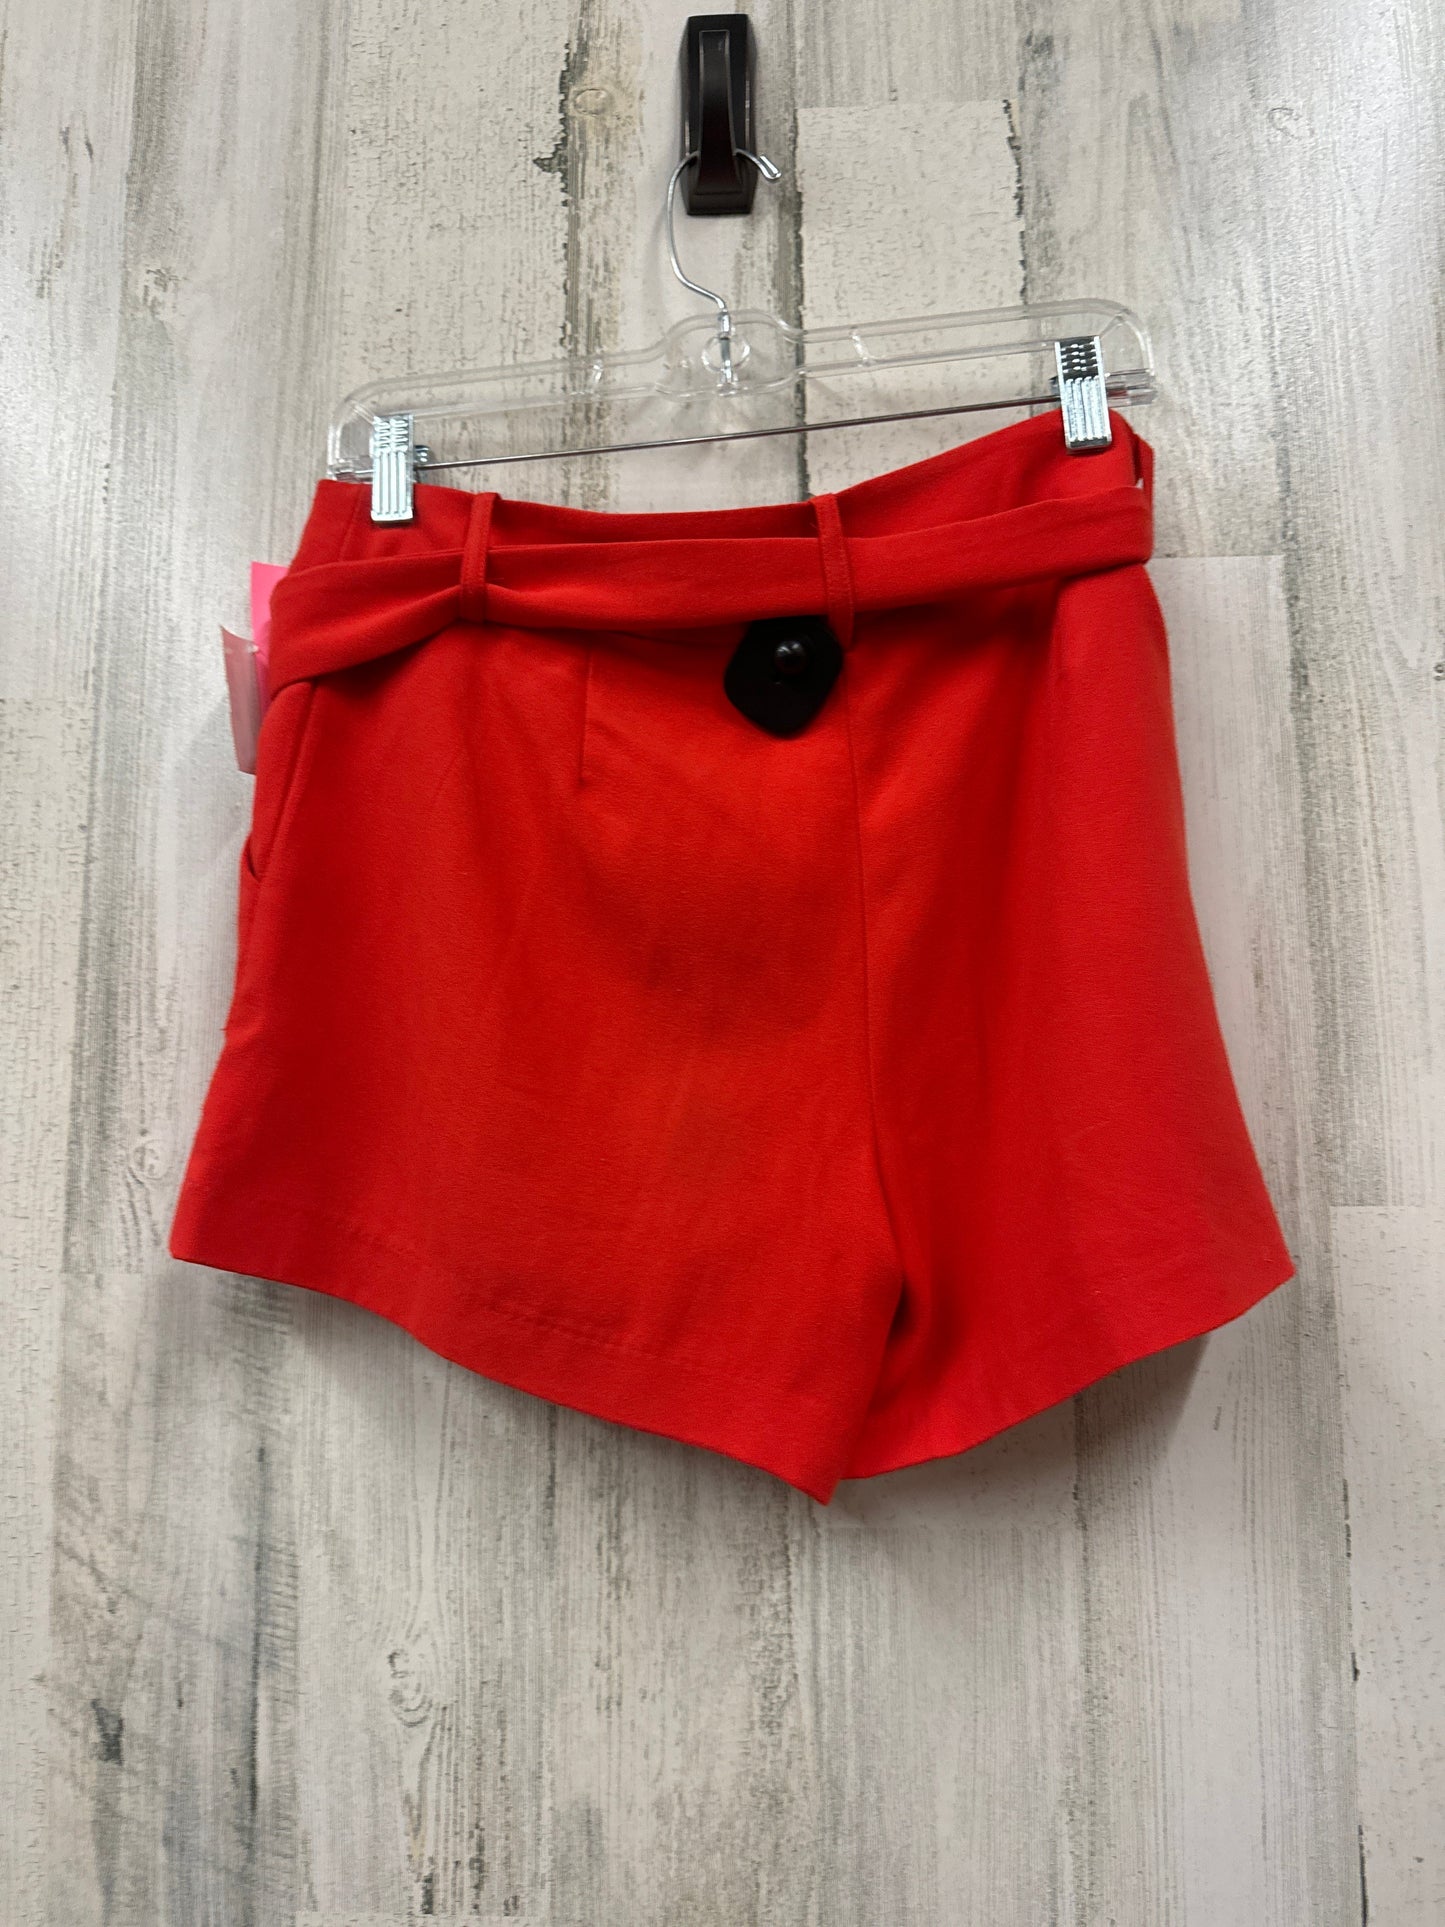 Orange Shorts Cynthia Rowley, Size 8